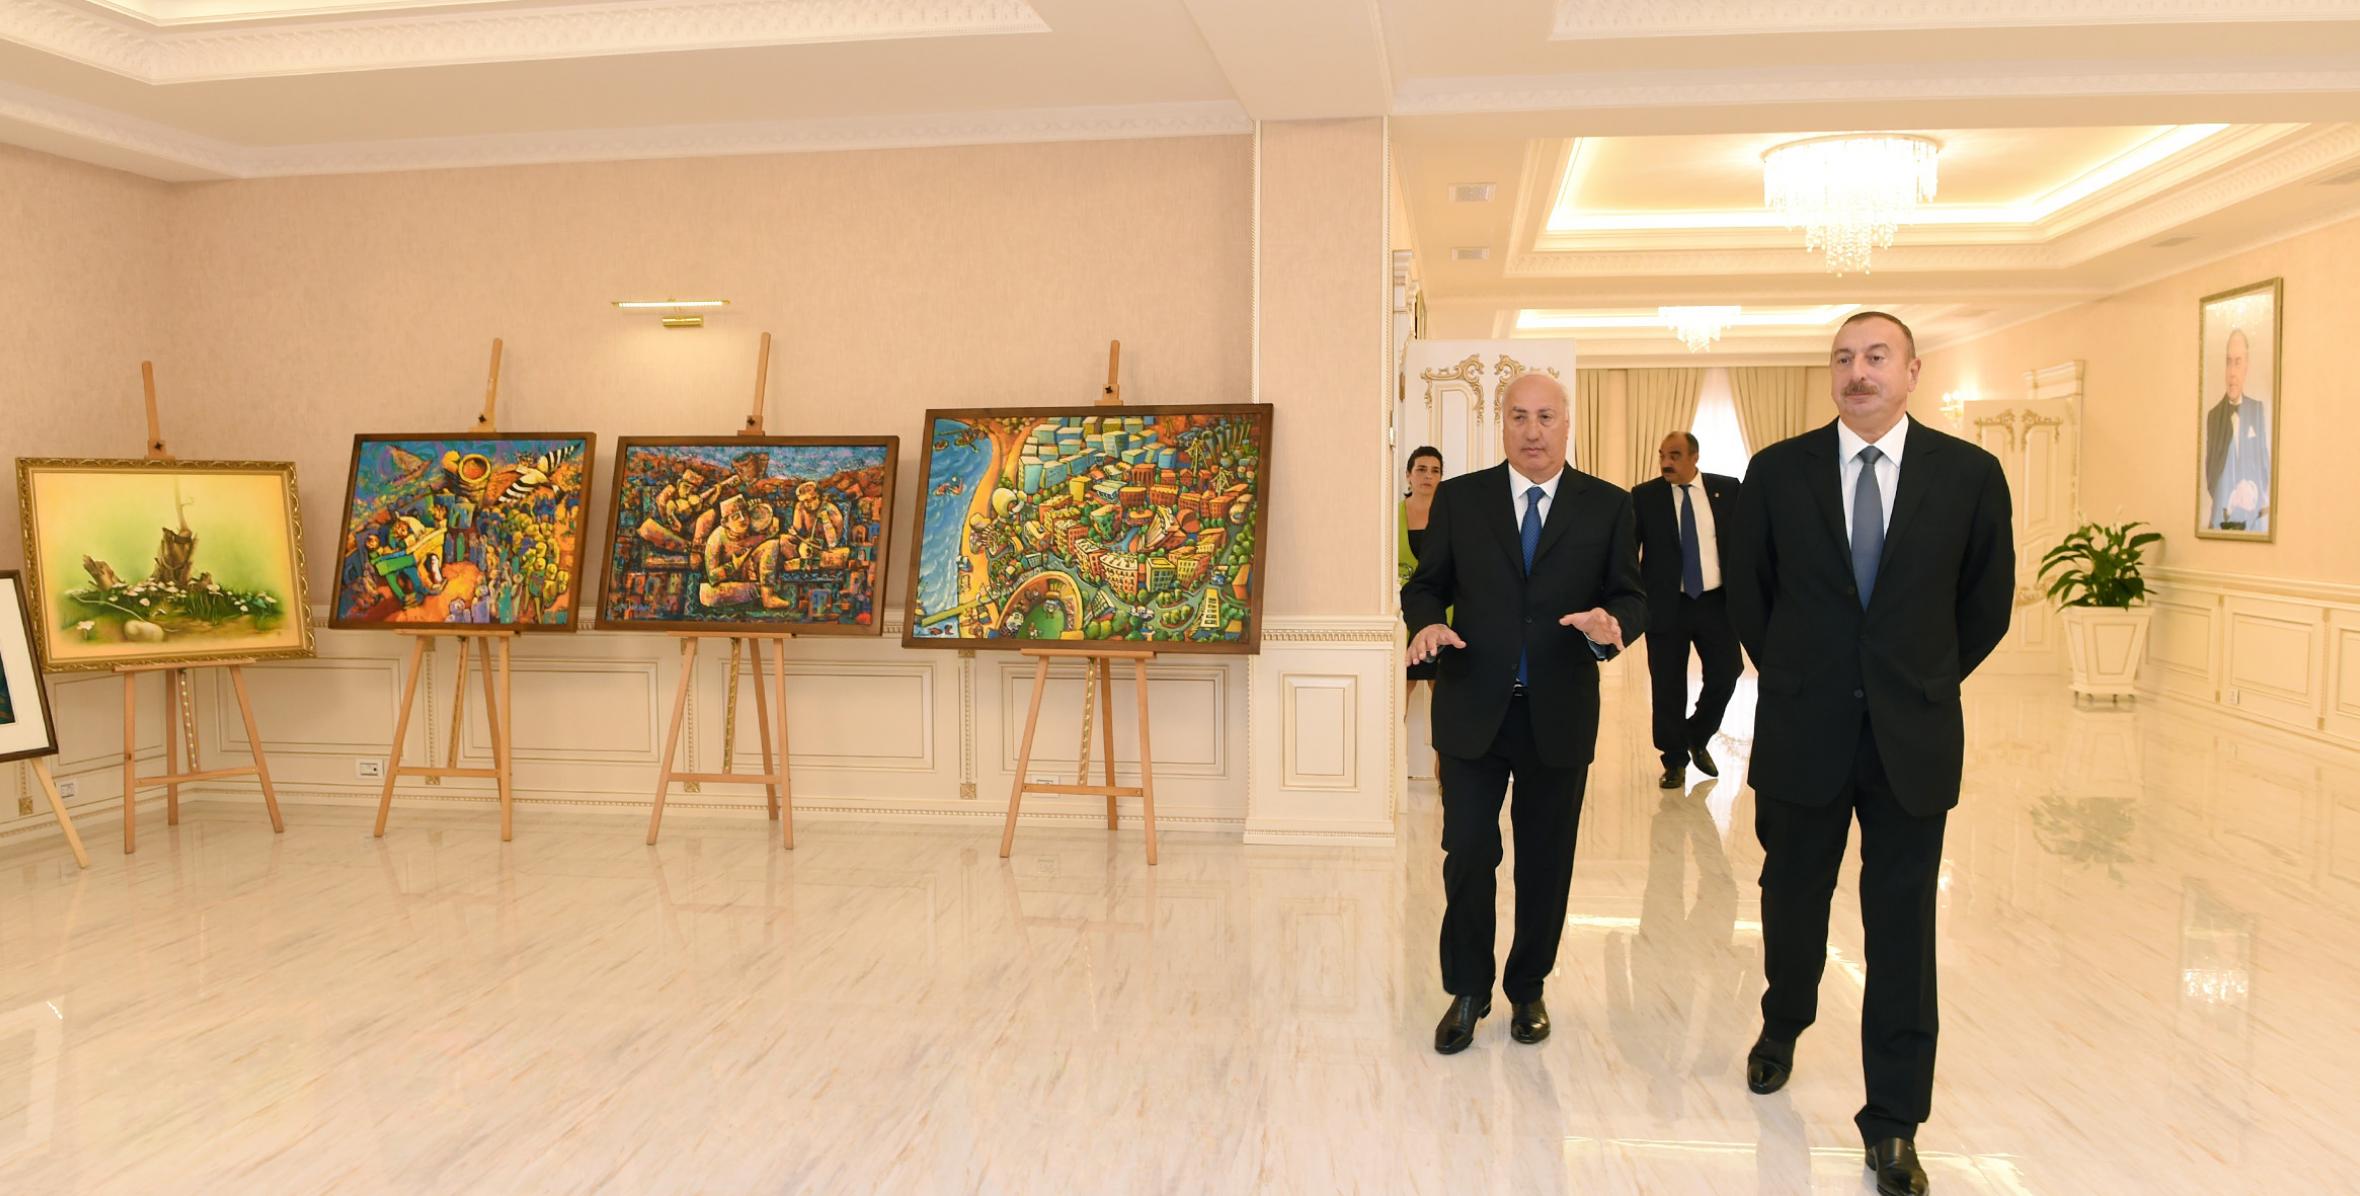 Ilham Aliyev opened Heydar Aliyev Center in Sumgayit